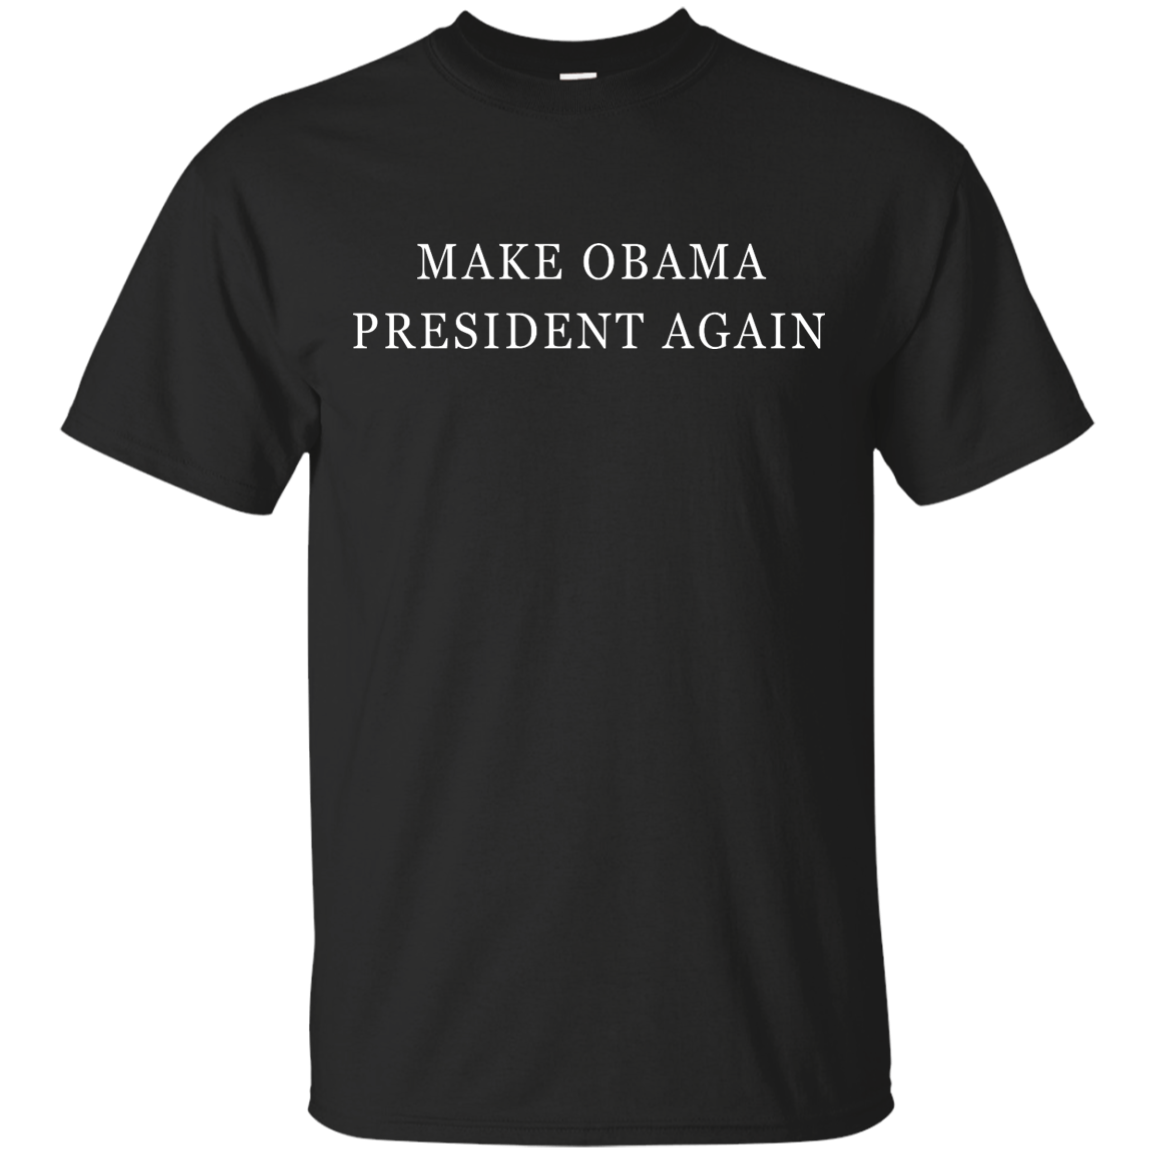 Make Obama President Again Shirt, Sweater, Tank